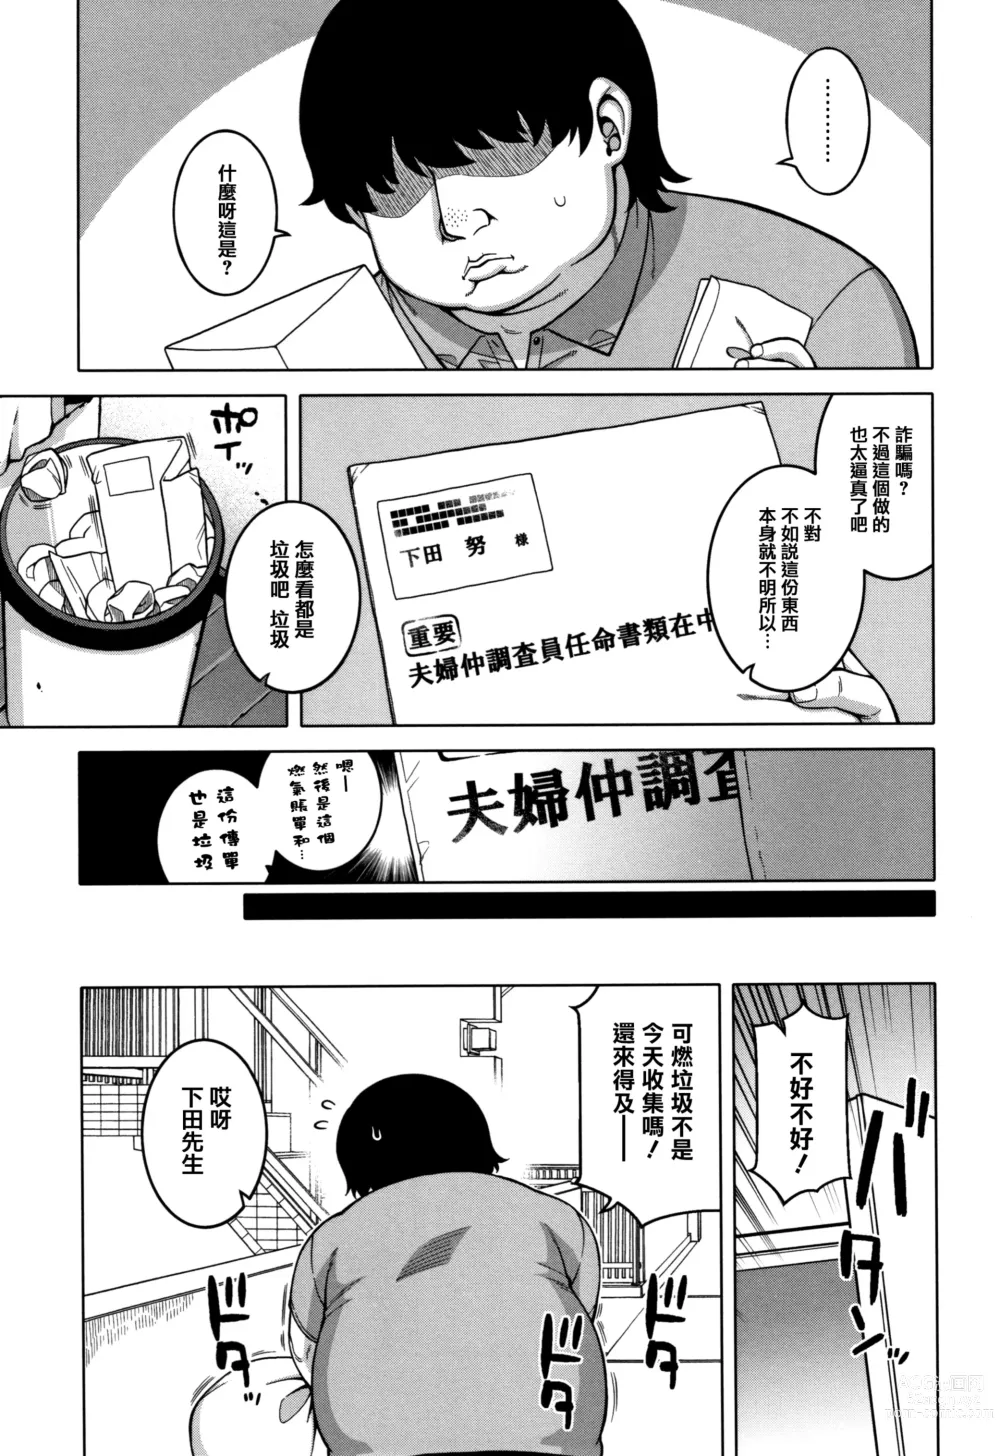 Page 13 of manga 催眠夫婦仲調査